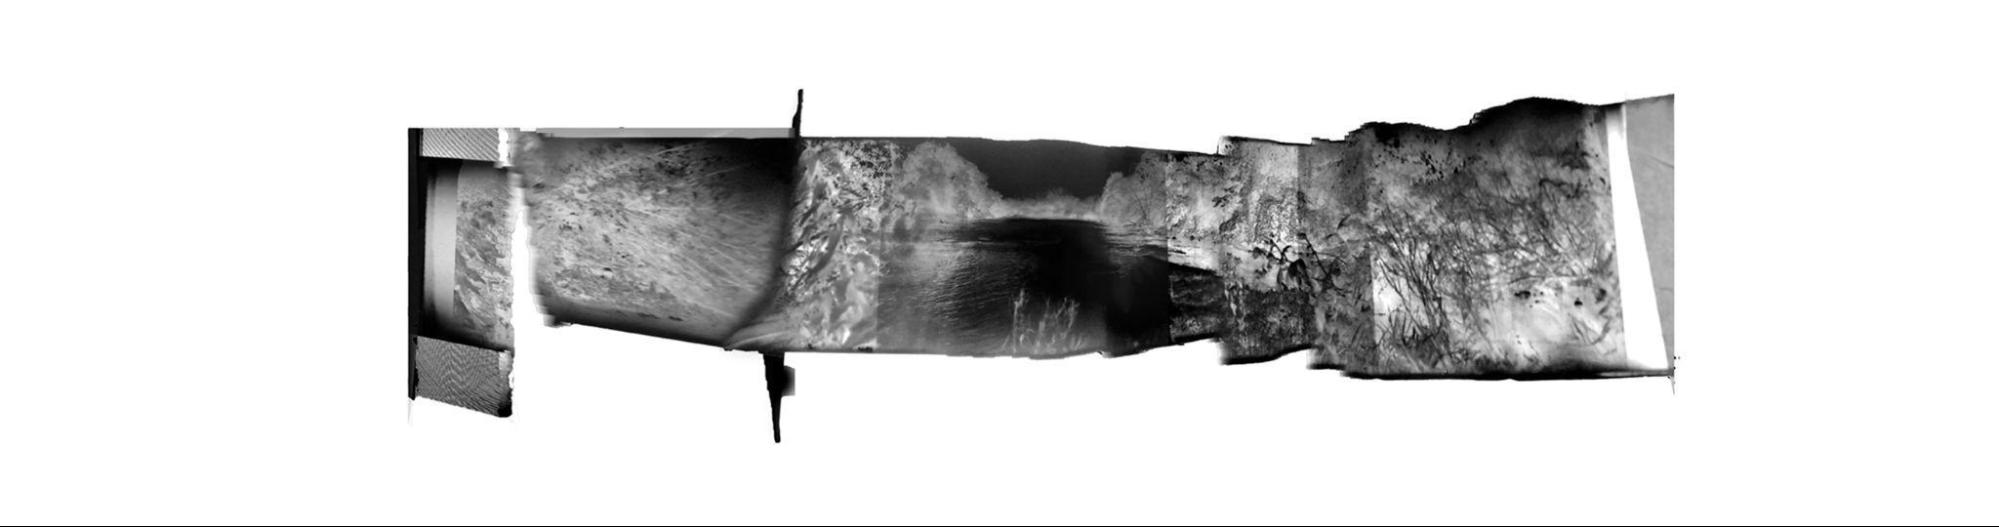 Barbara Ciurej and Lindsay Lochman, River 2, 2021, Negative rephotographed with handheld iPhone in panorama mode, Digital print, edition of 2 + 1 AP, 8” x 36”